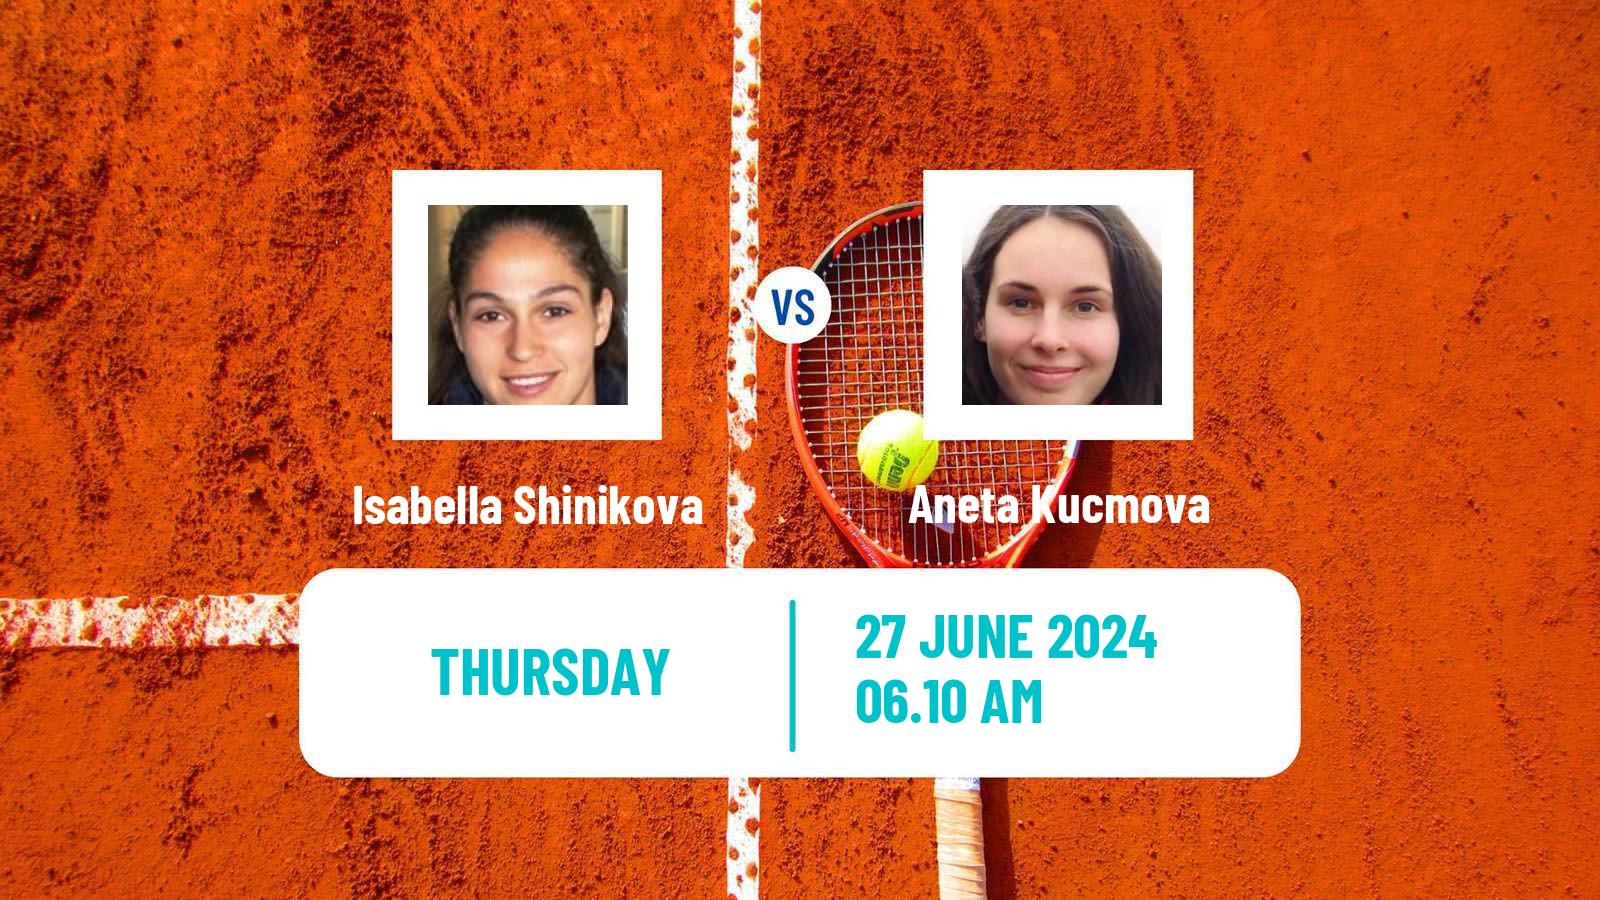 Tennis ITF W75 Doksy Stare Splavy Women Isabella Shinikova - Aneta Kucmova